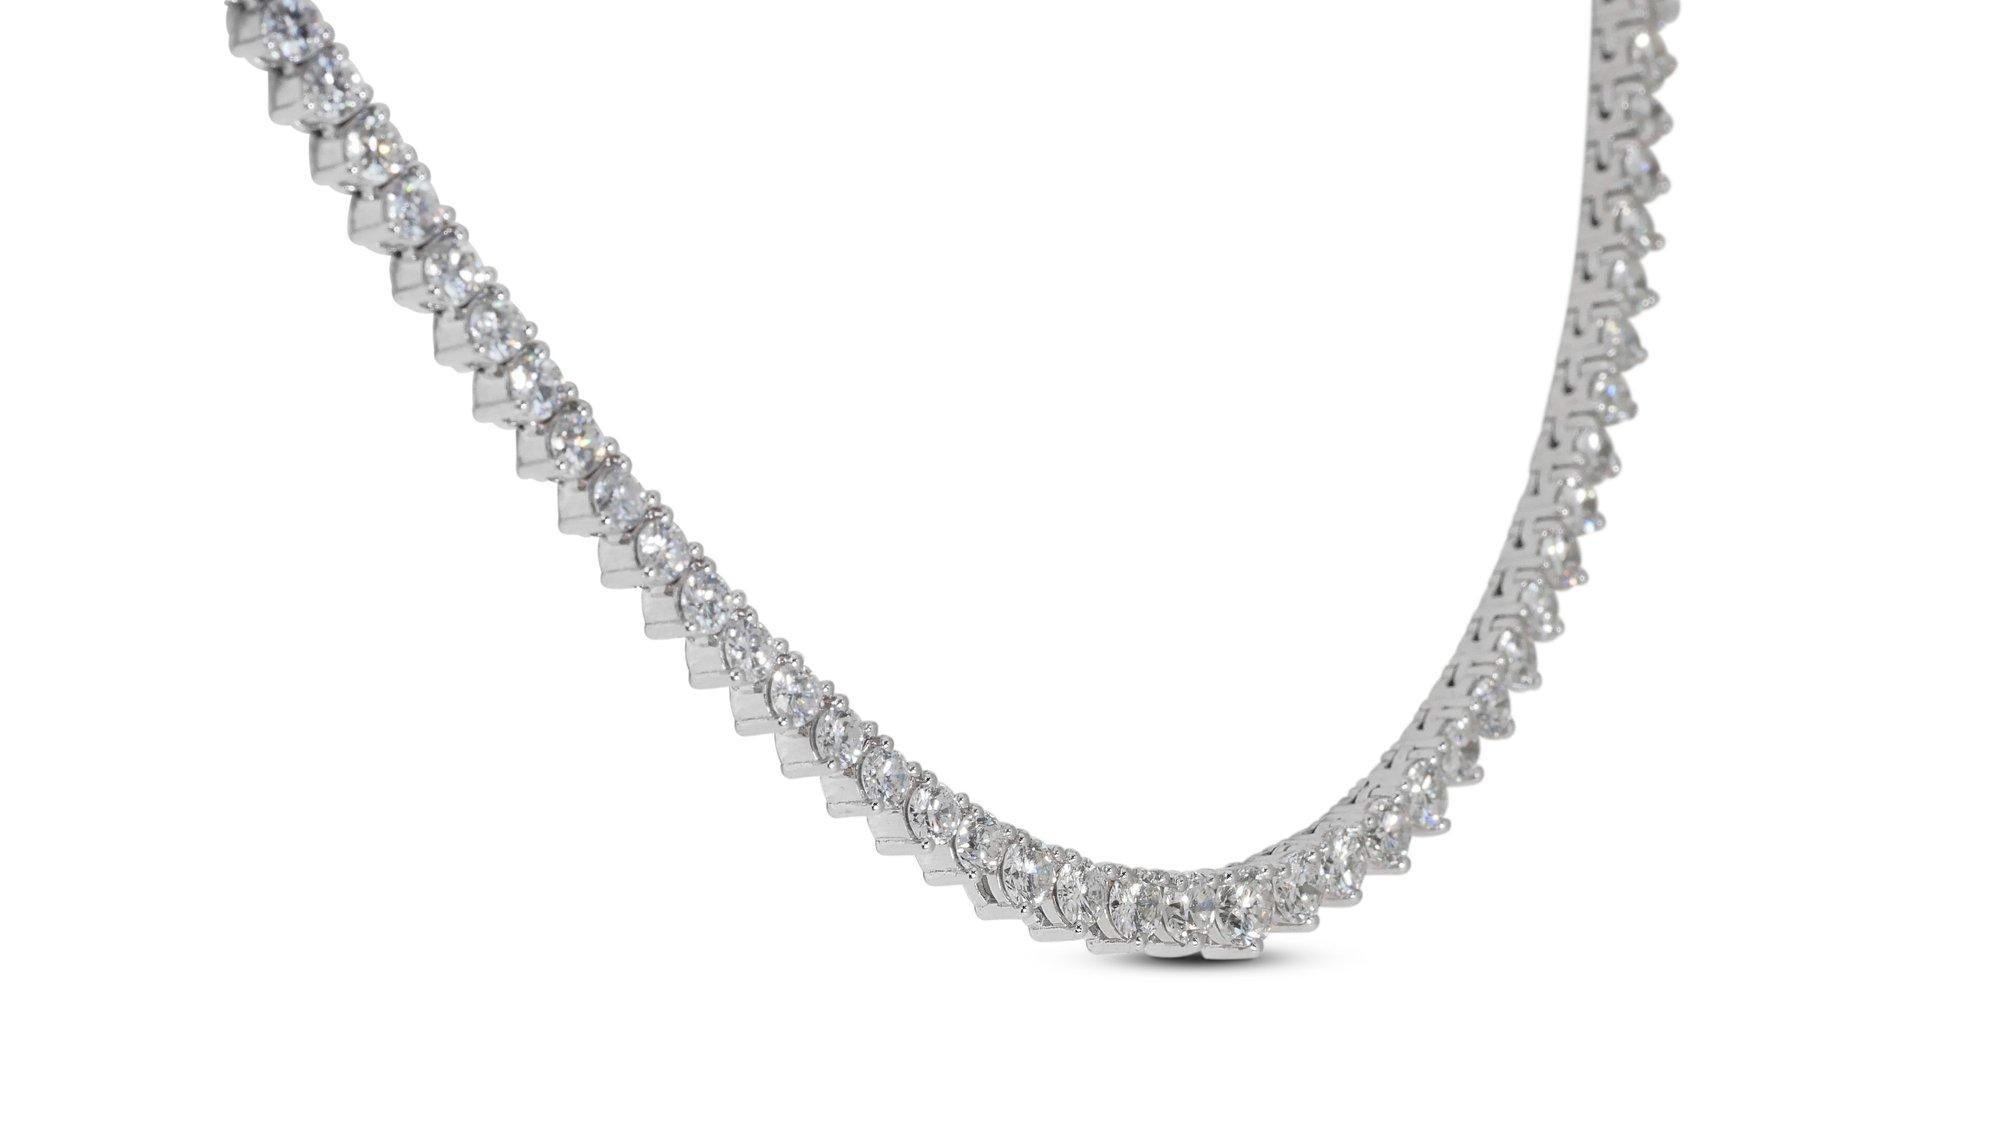 Ravishing 14k White Gold Necklace w/ 8.36 ct Natural Diamonds IGI Certificate For Sale 6